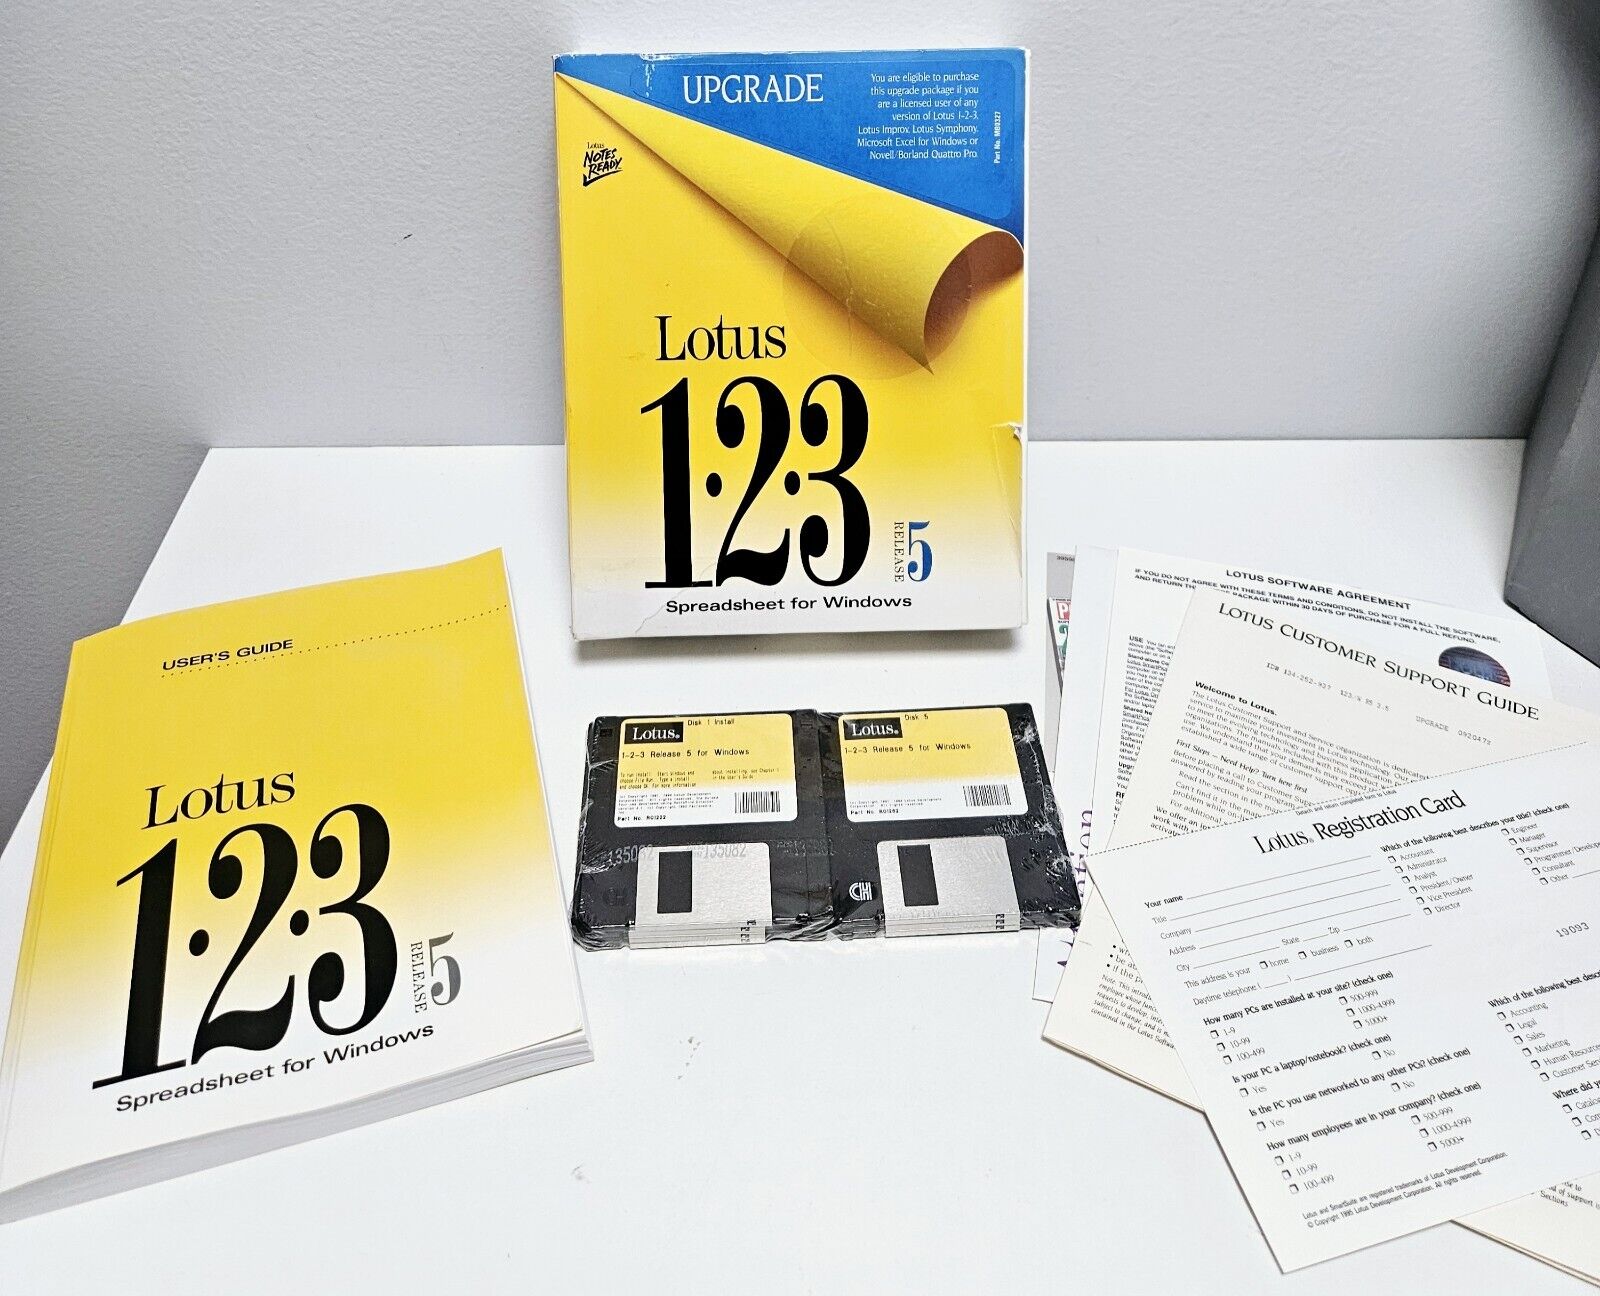 Lotus 123 Release 5 (1994) Spreadsheet For Windows- 3.5 HD Disks Still Sealed 